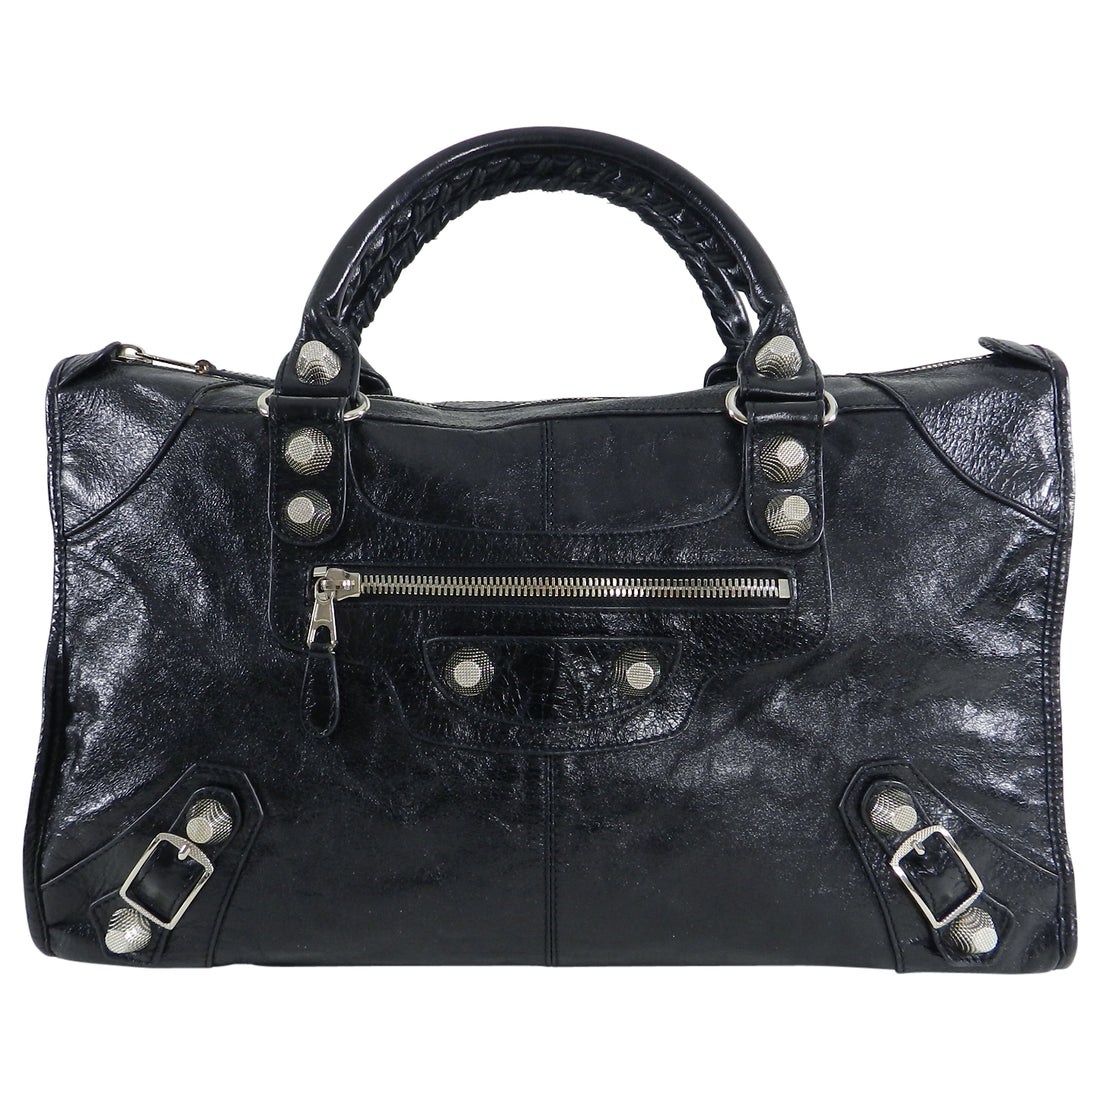 Work leather bag Balenciaga Black in Leather  18858602